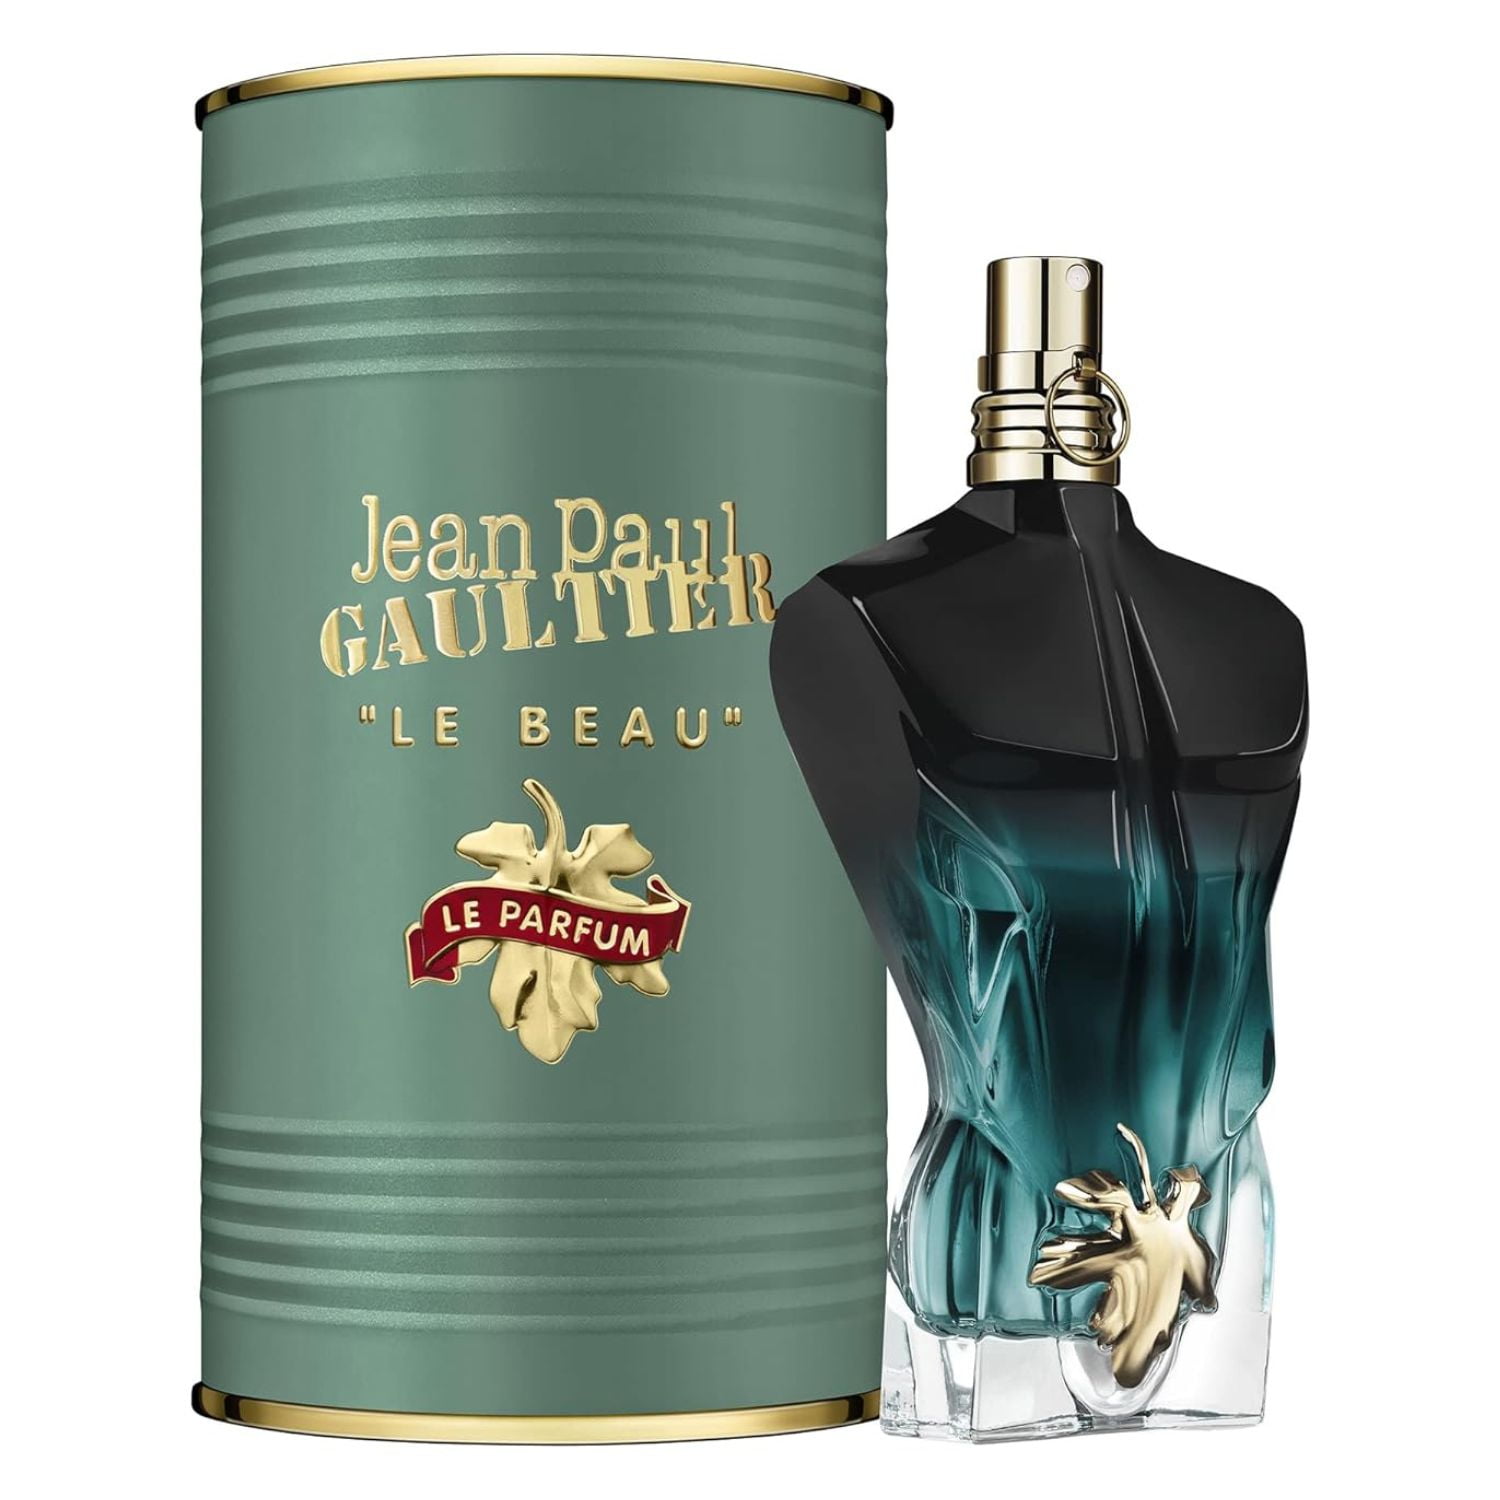 Jean Paul Gaultier EDT Spray for Men - 2.5 oz bottle